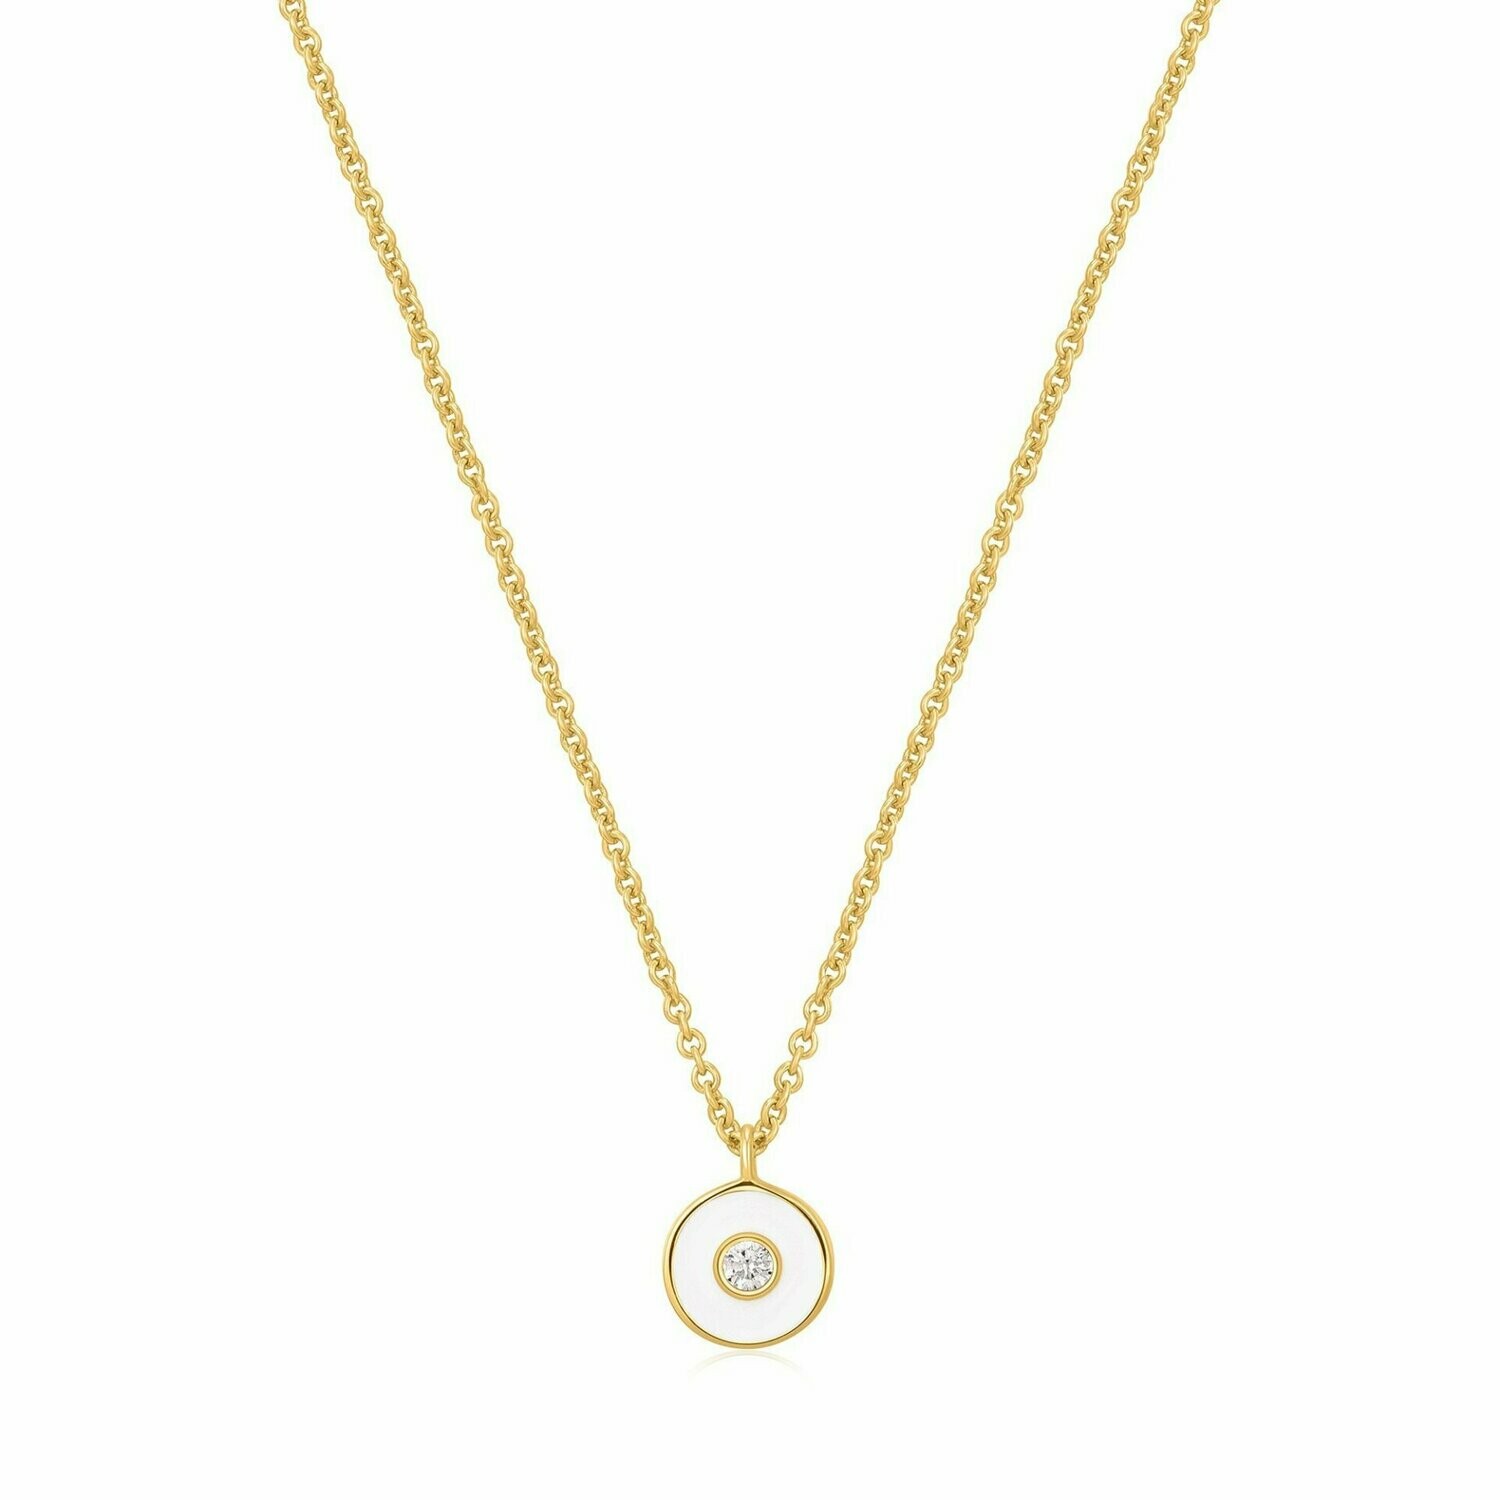 Optic White Enamel Disc Gold Necklace